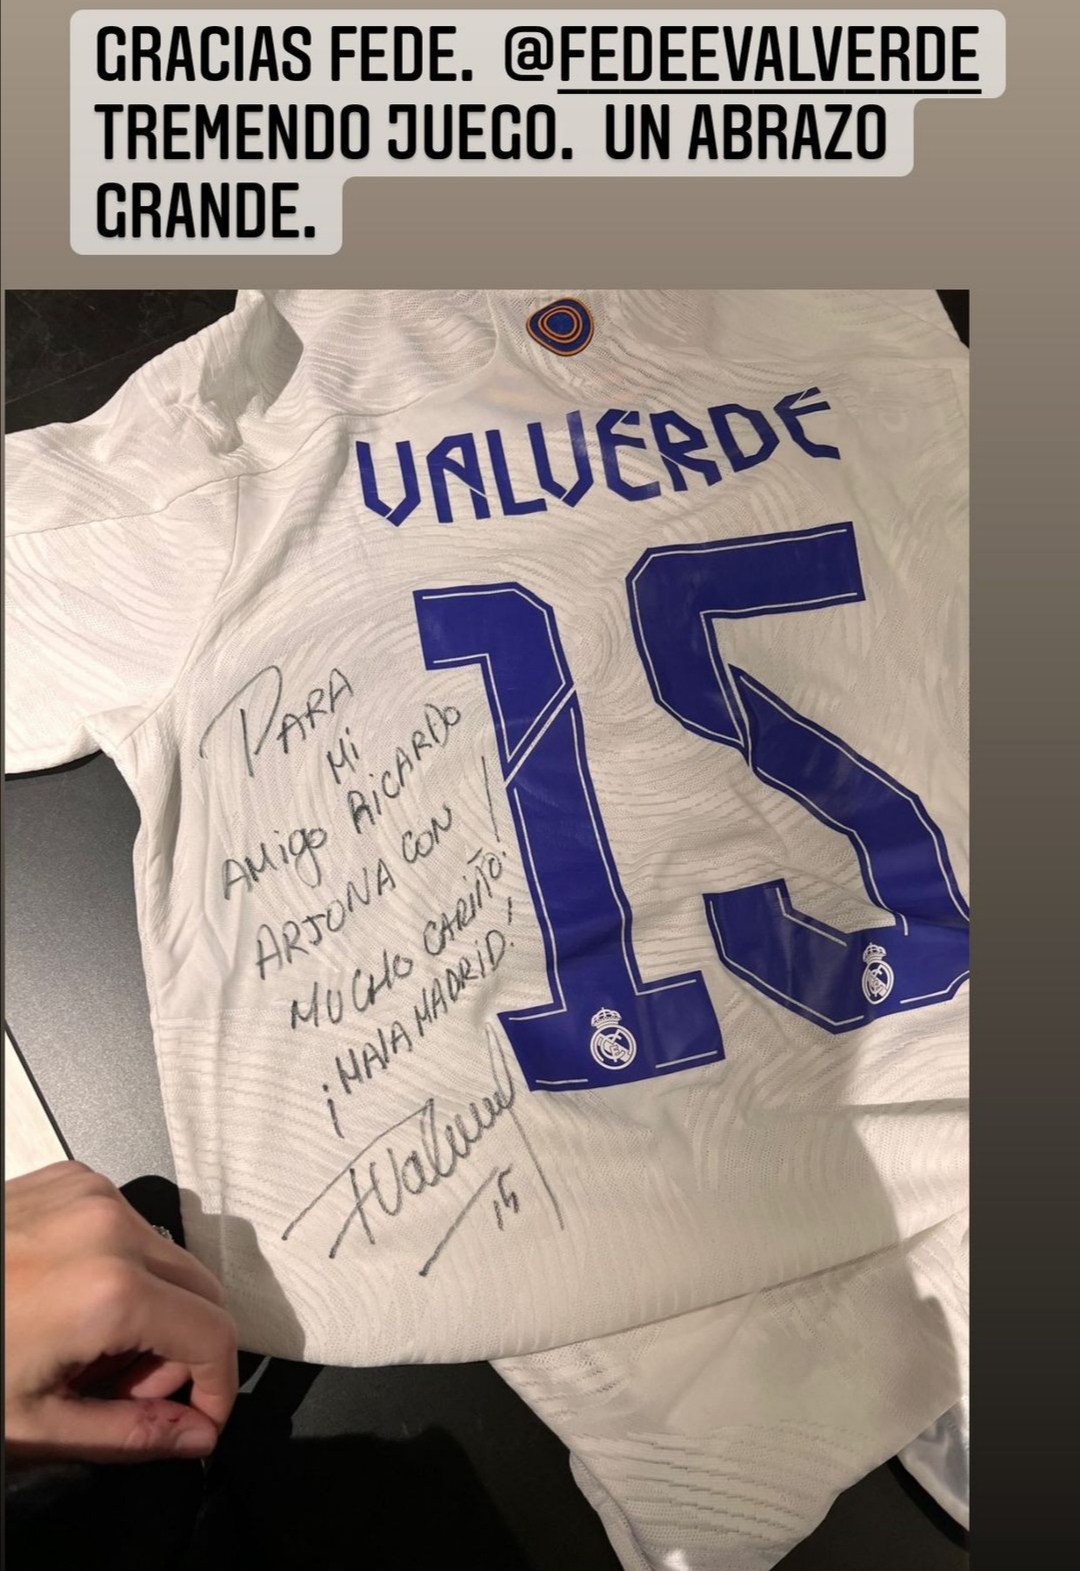 Tras la remontada del Real Madrid al PSG, Ricardo Arjona recibe camiseta autografiada de Fede Valverde